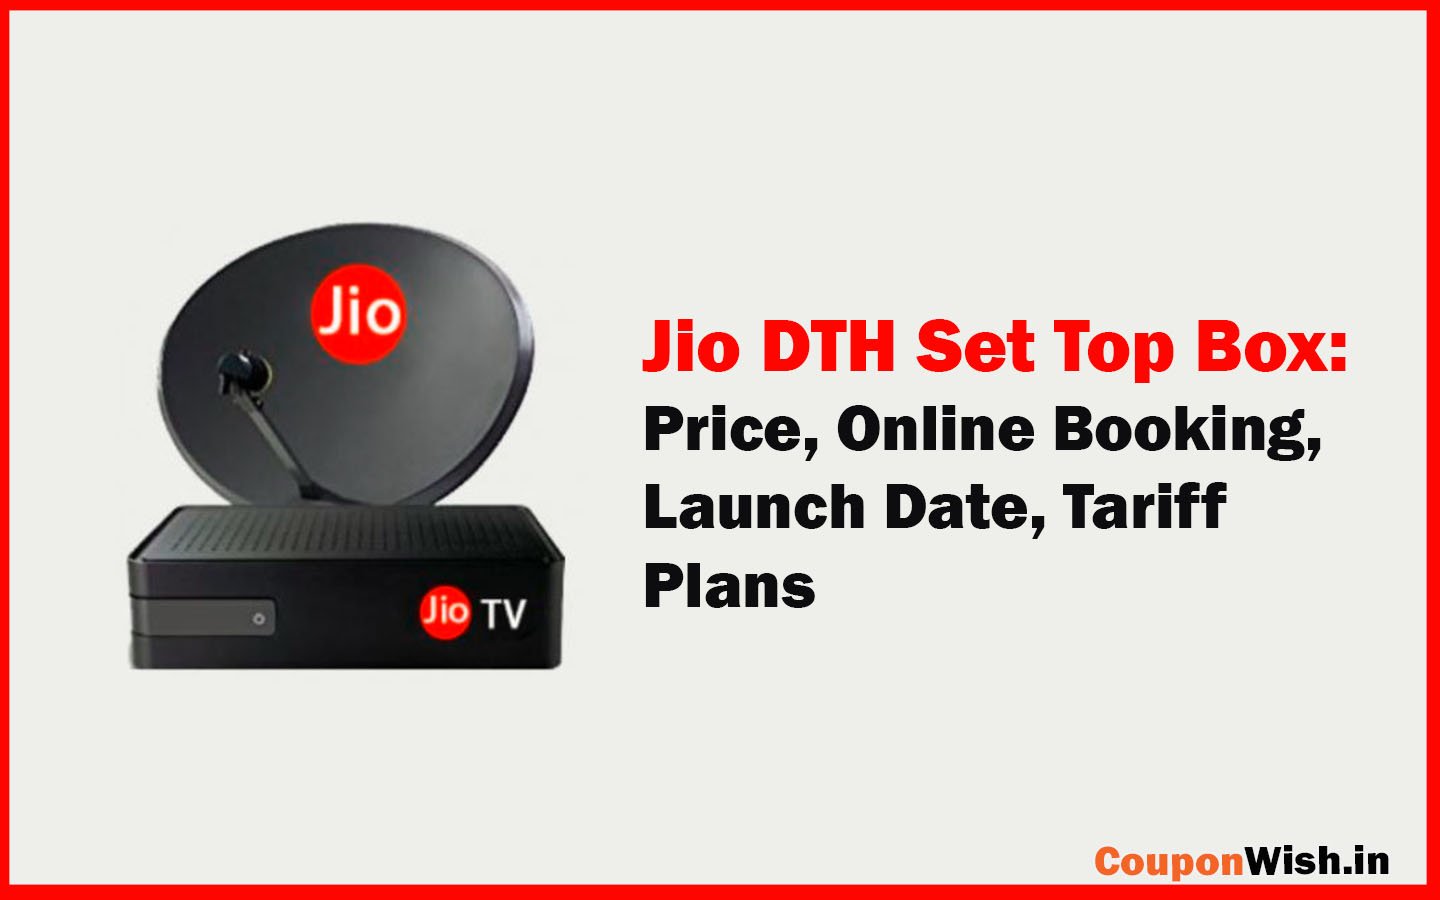 Jio DTH Set Top Box: Price, Online Booking, Launch Date, Tariff Plans